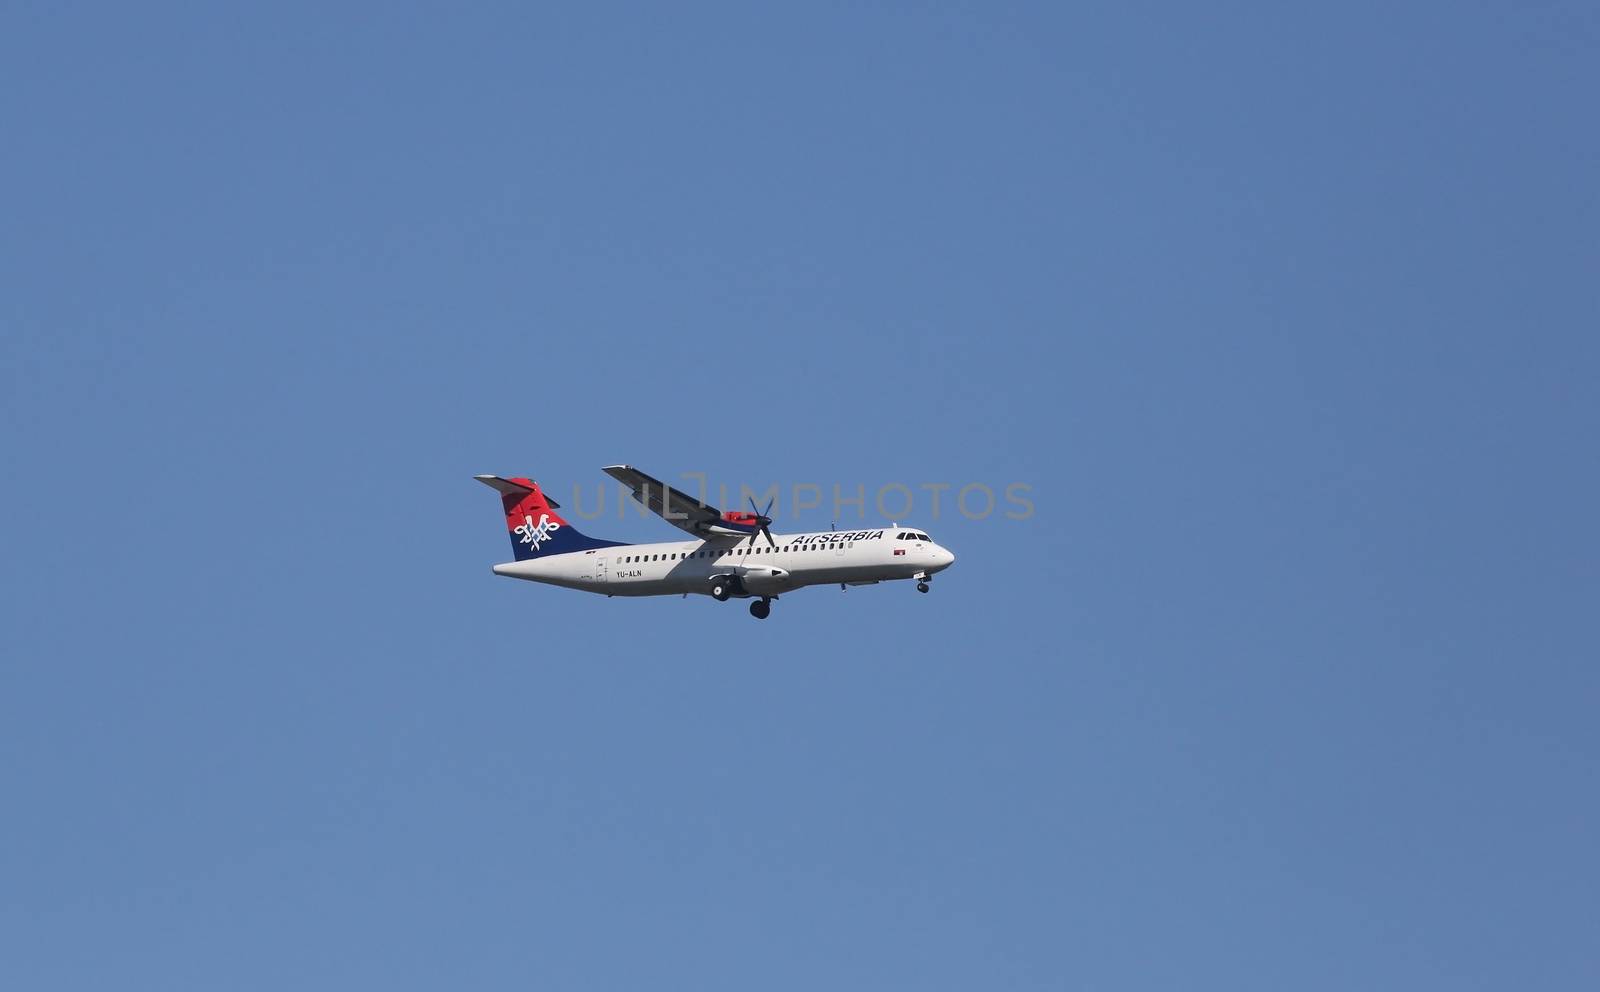 ATR 72, registration XB-IXP of Air Serbia landing on Zagreb Airport Pleso